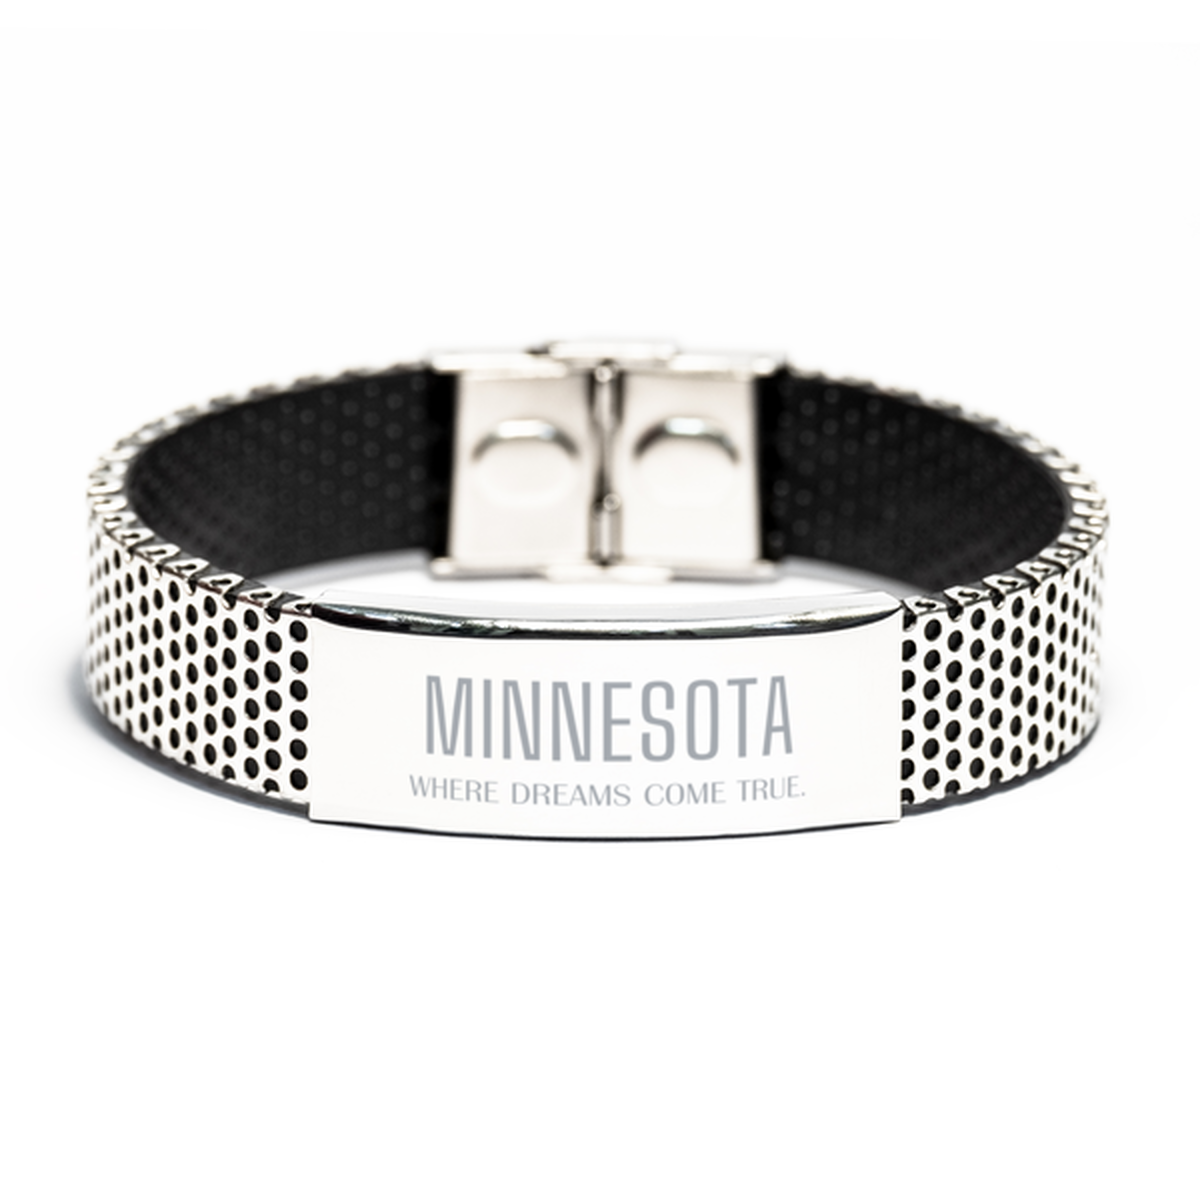 Love Minnesota State Stainless Steel Bracelet, Minnesota Where dreams come true, Birthday Inspirational Gifts For Minnesota Men, Women, Friends